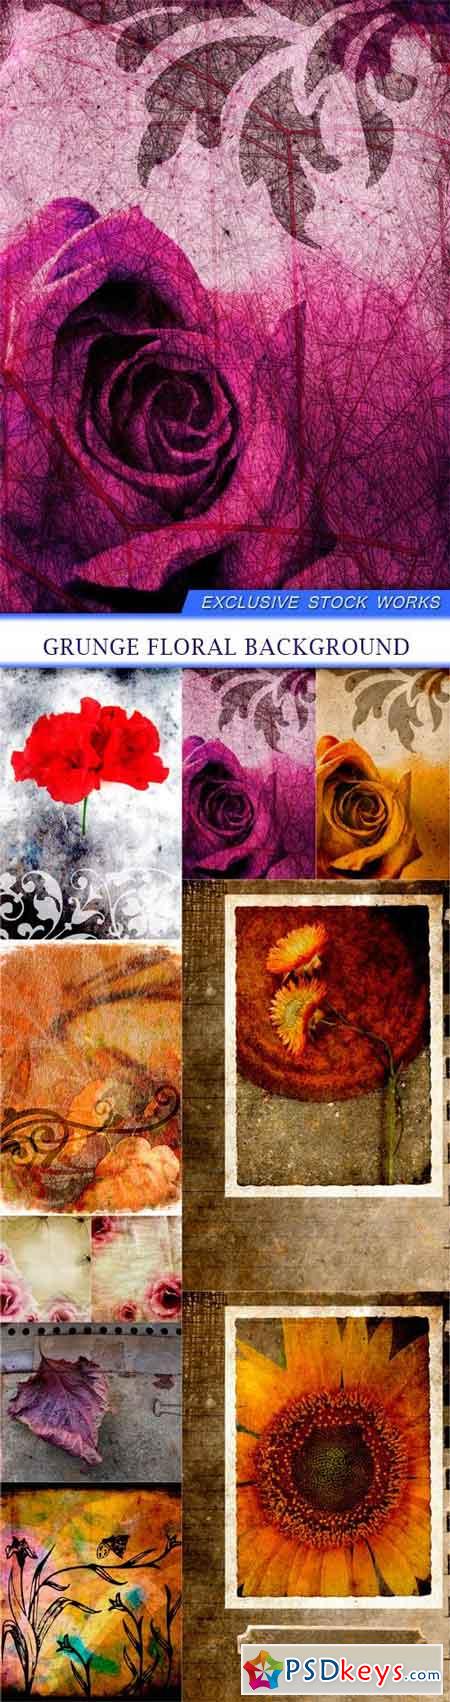 Grunge floral background 10X JPEG